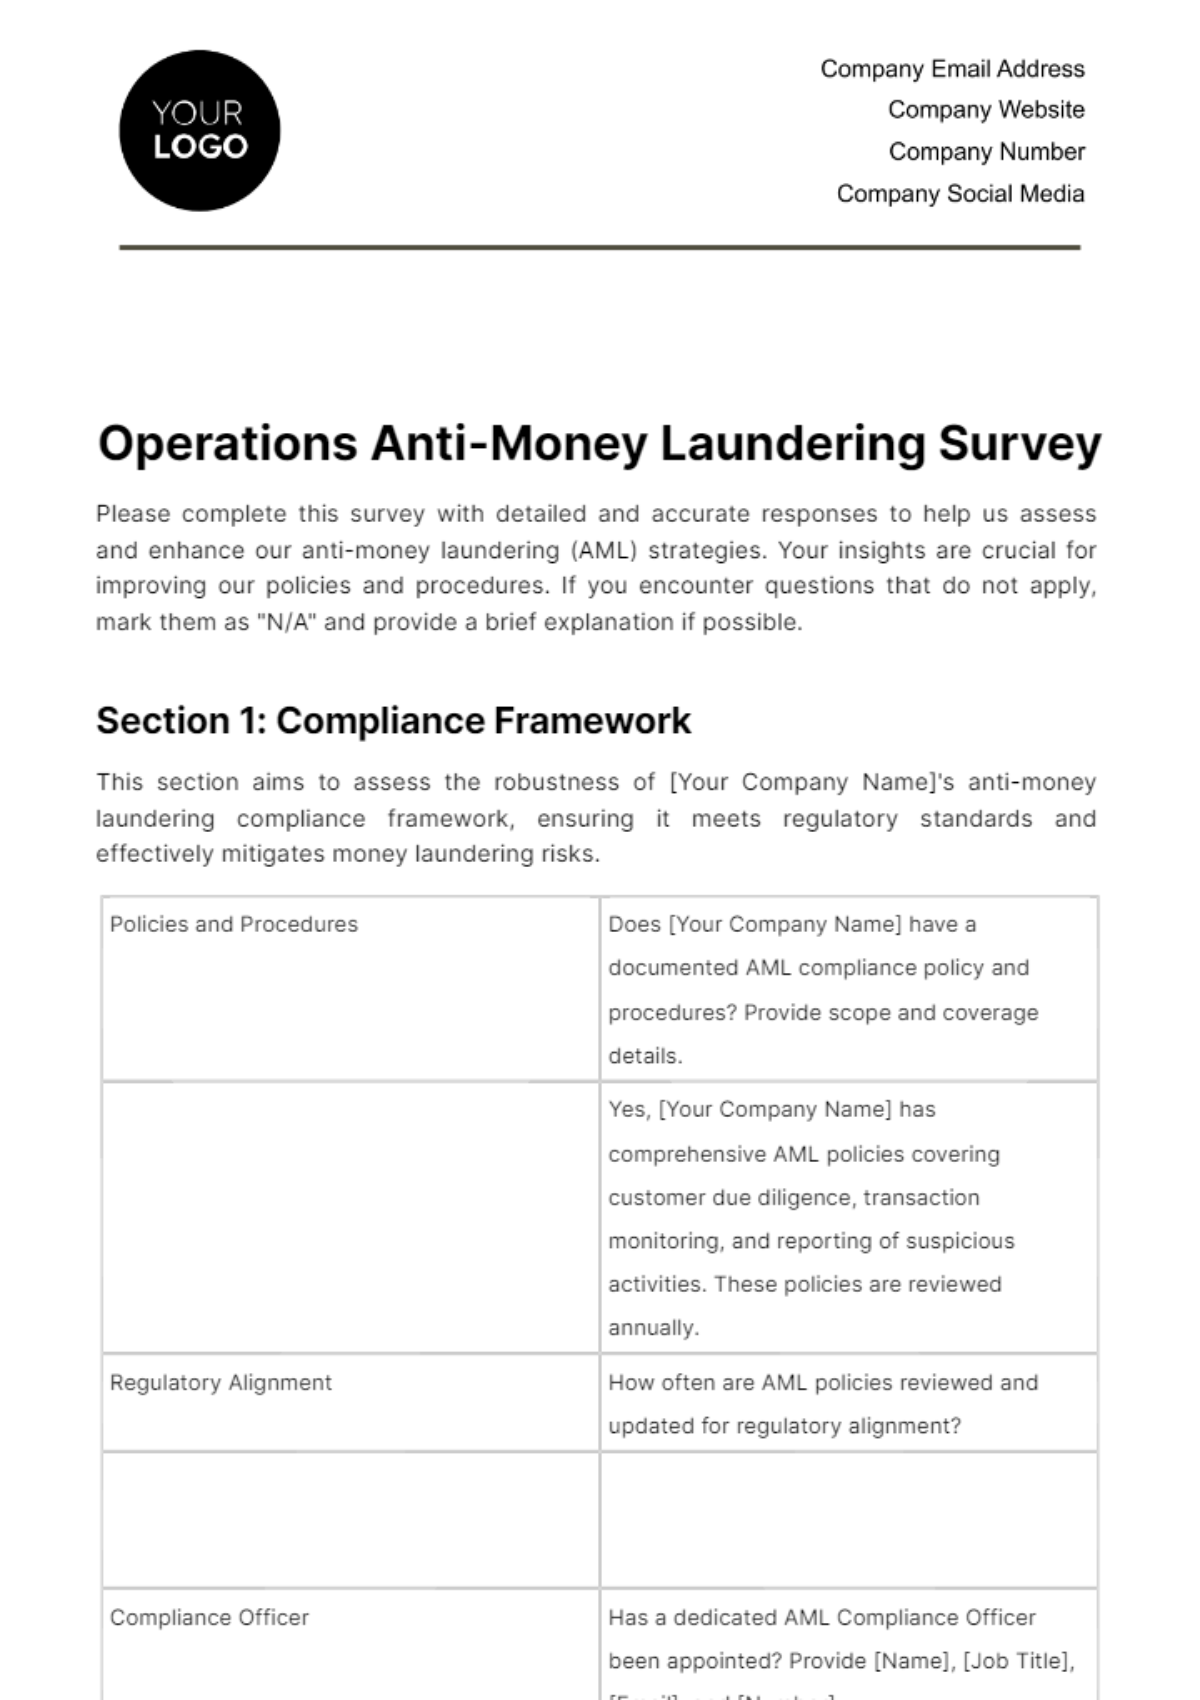 Operations Anti-Money Laundering Survey Template